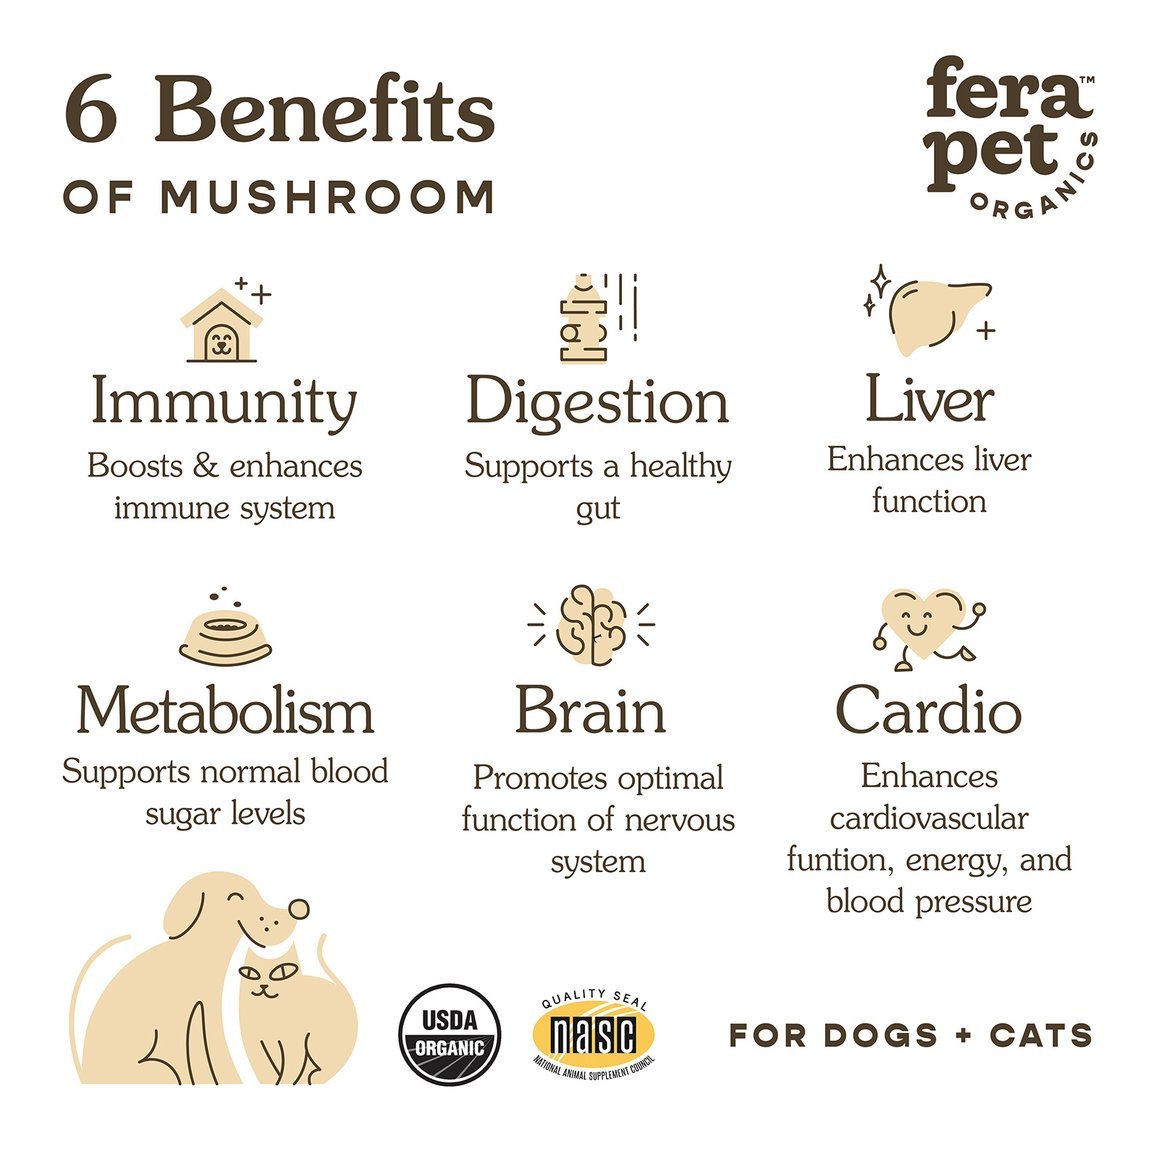 Fera Pet Organics Organic Mushroom Blend for Immune Support, 2.12oz